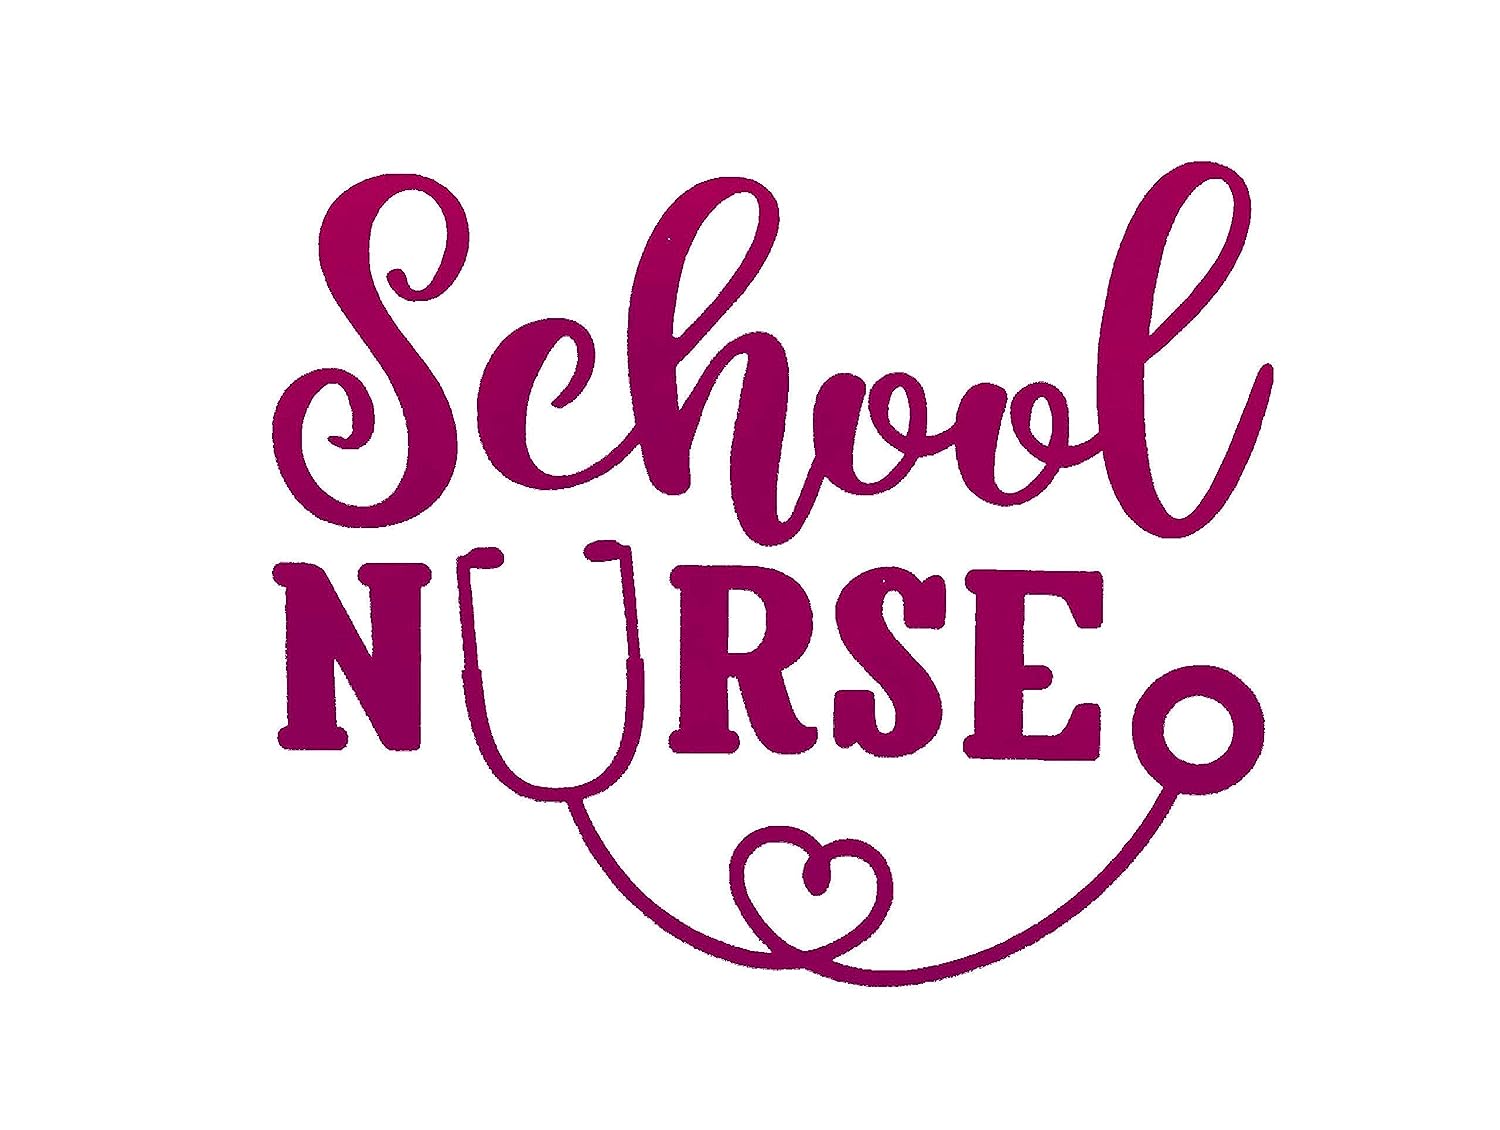 Custom School Nurse Stethoscope Vinyl Decal - Nursing [...]